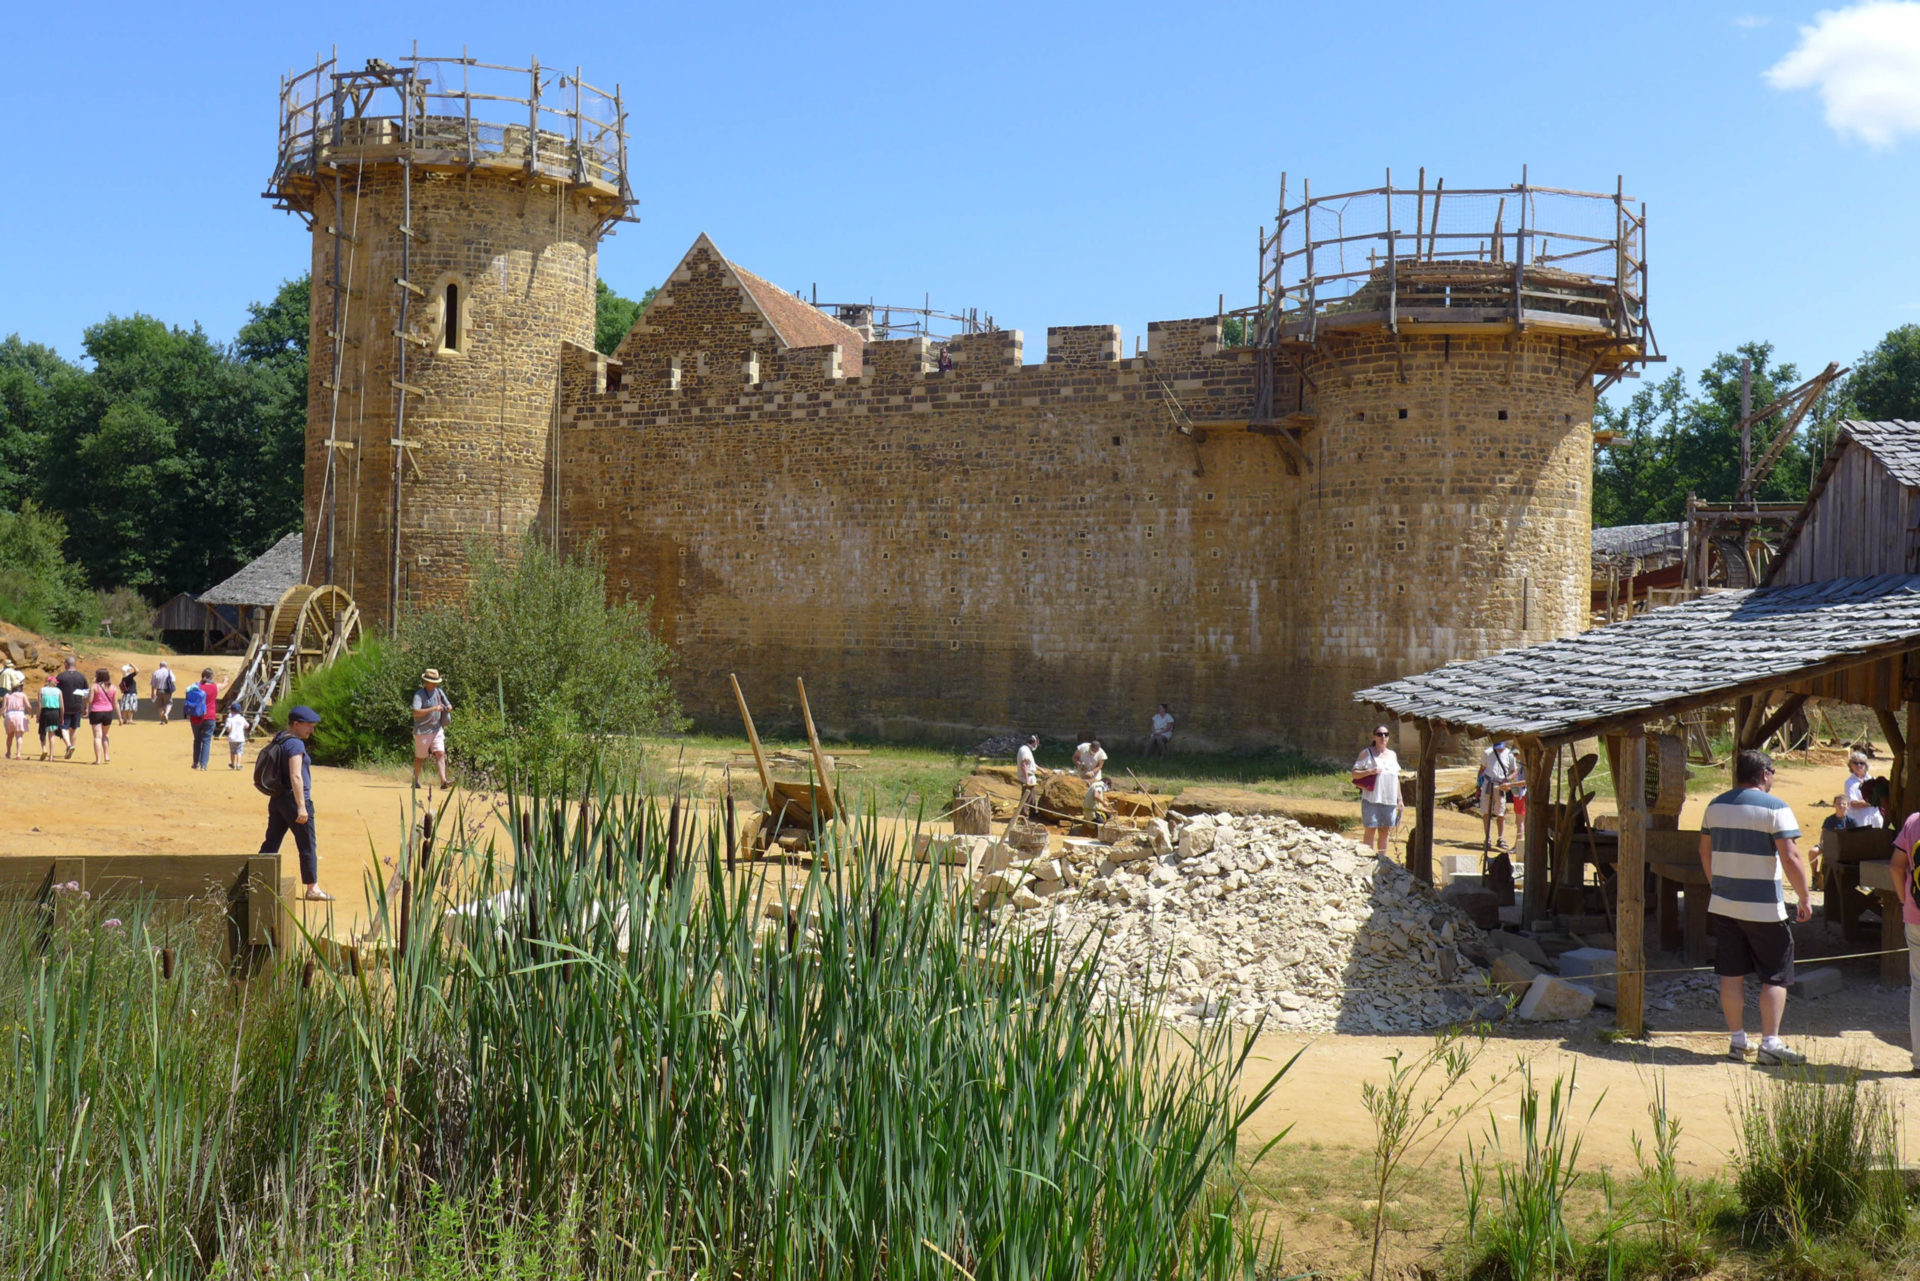 Château de Guédelon, construire une forteresse médiévale aujourd'hui